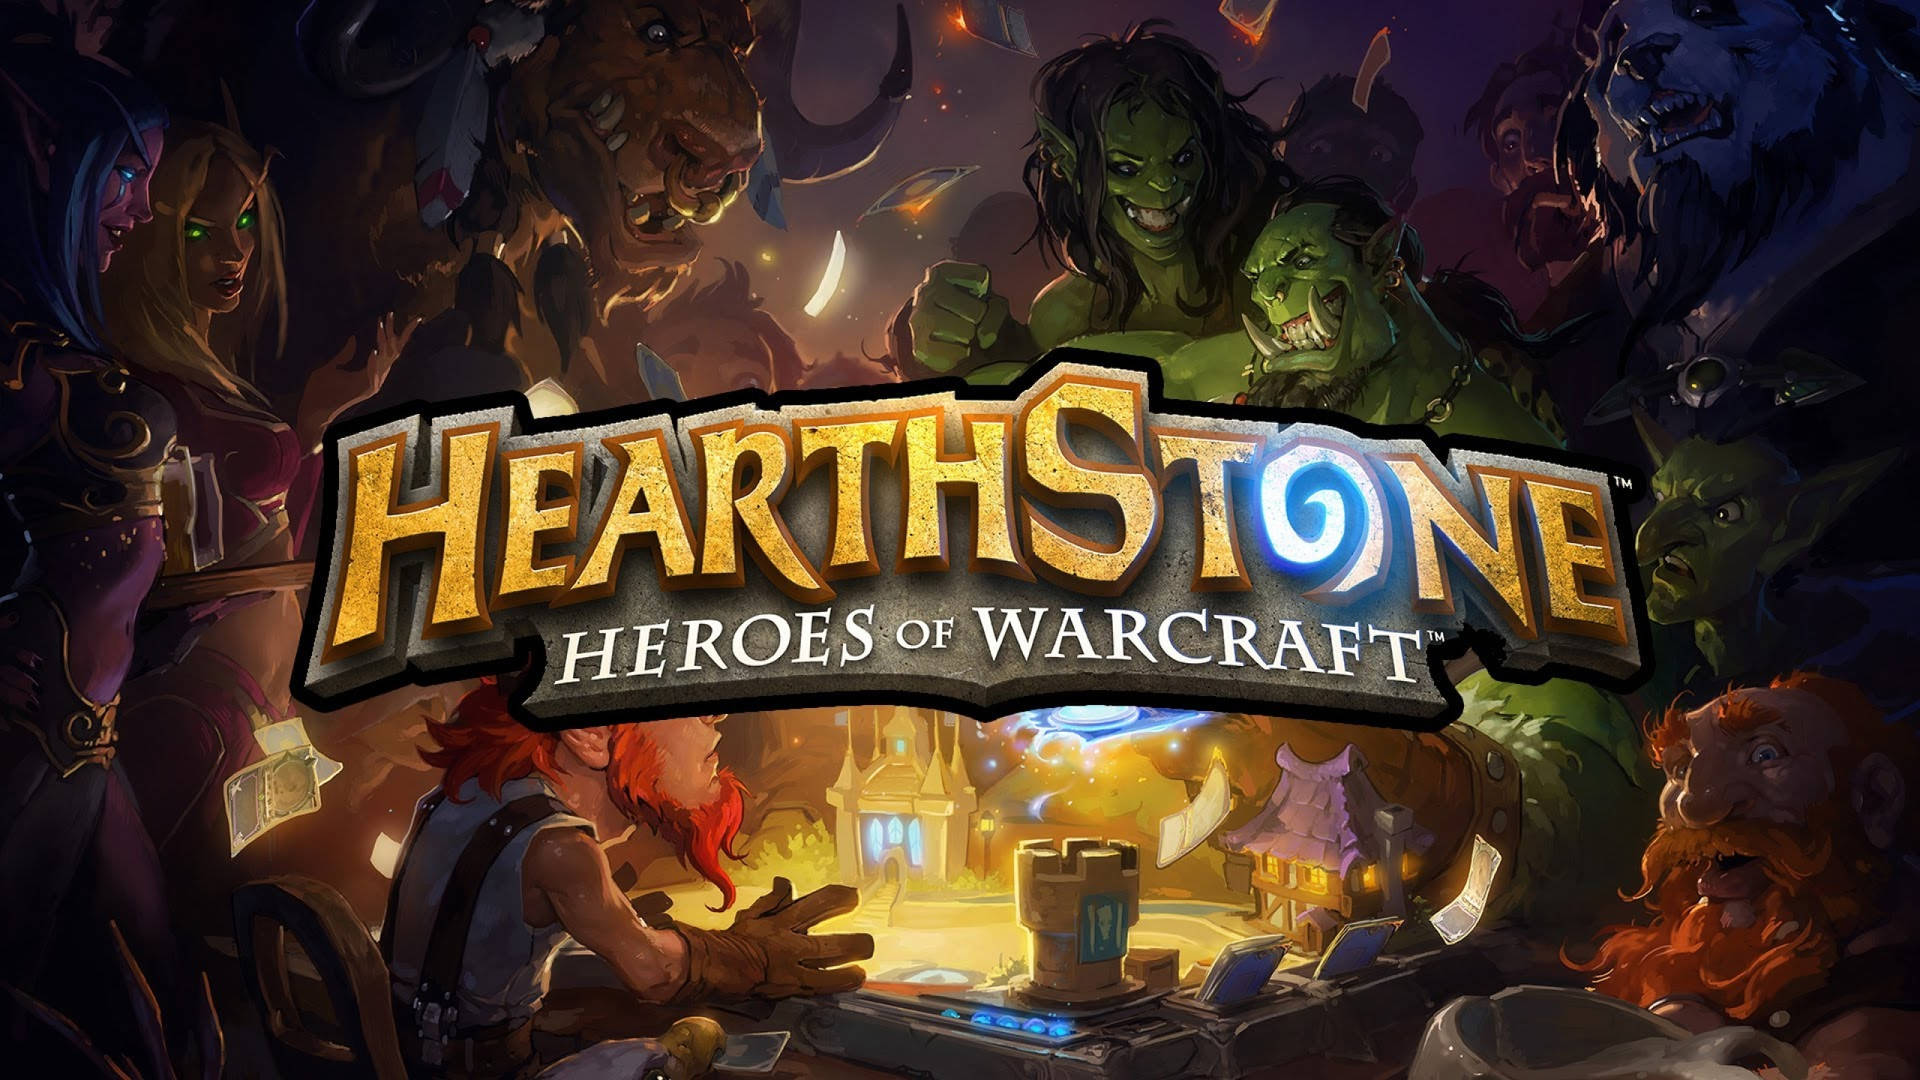 2560 X 1440 Hearthstone Heroes Of Warcraft Wallpaper